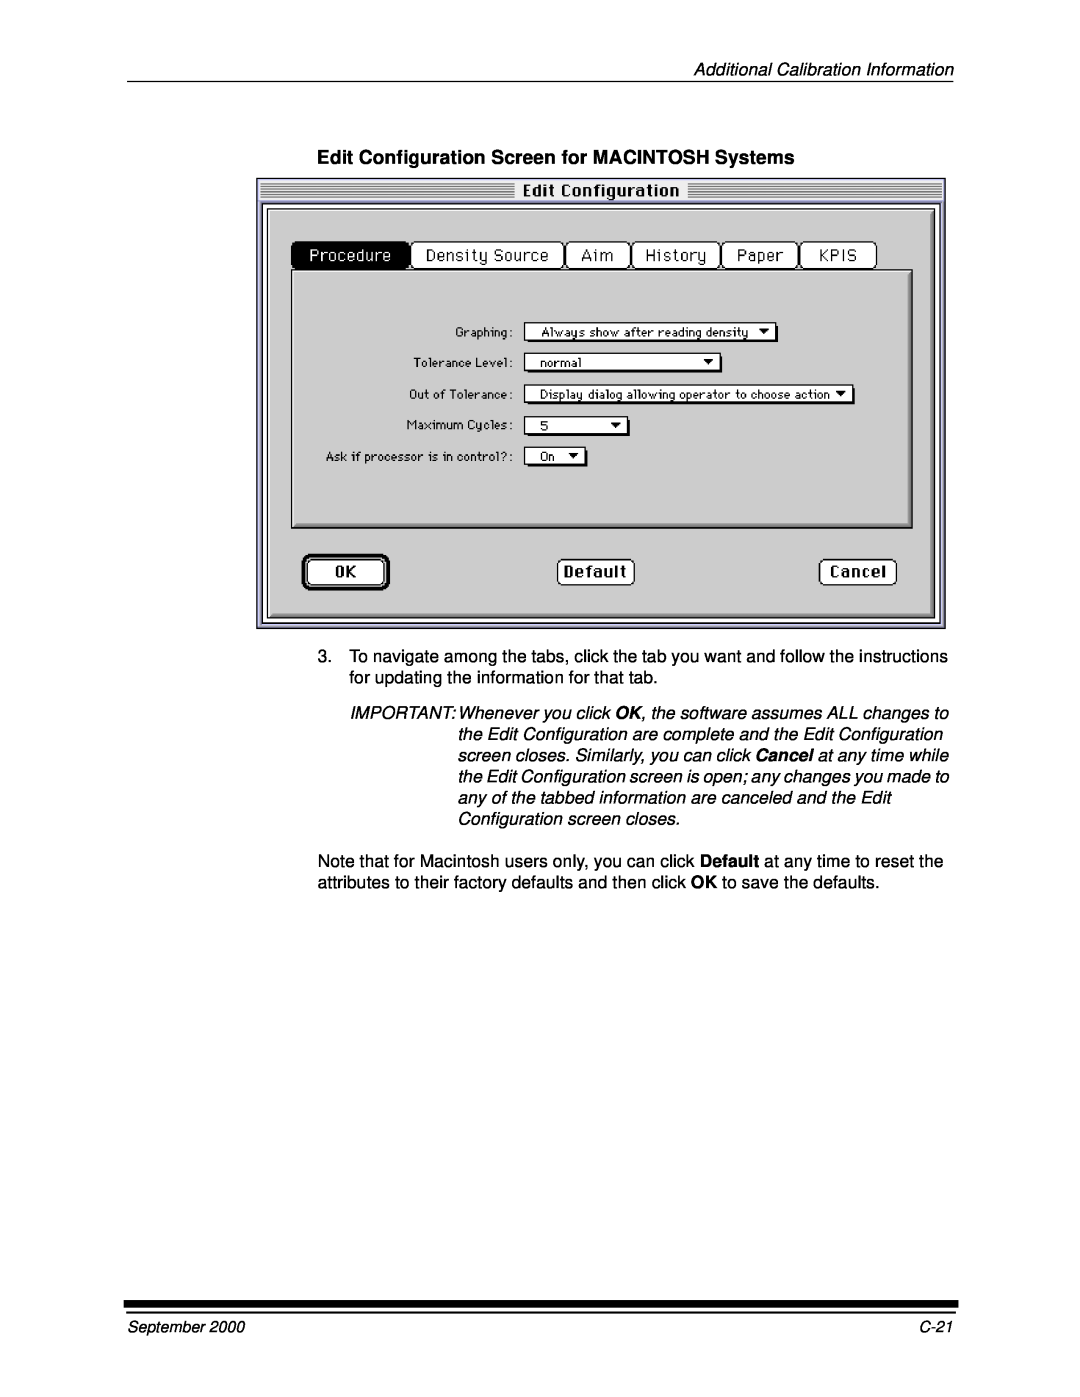 Kodak 20P manual Edit Configuration Screen for MACINTOSH Systems, Additional Calibration Information 